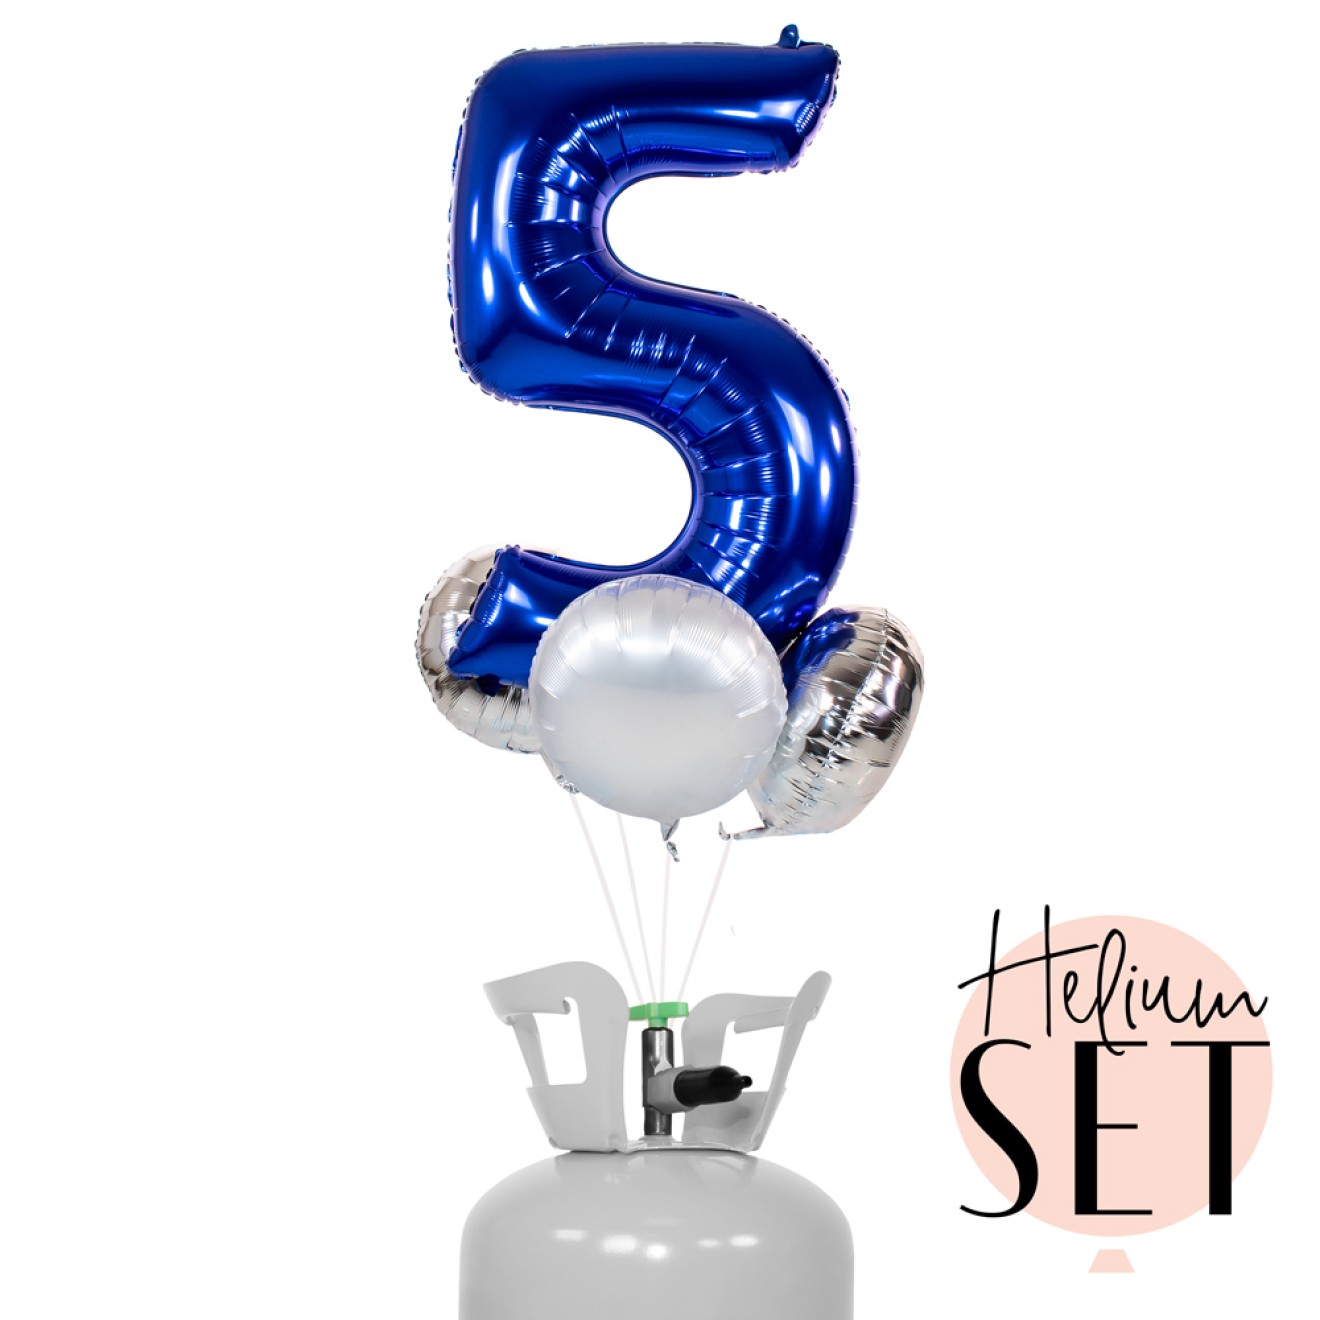 Helium Set - Blue Five